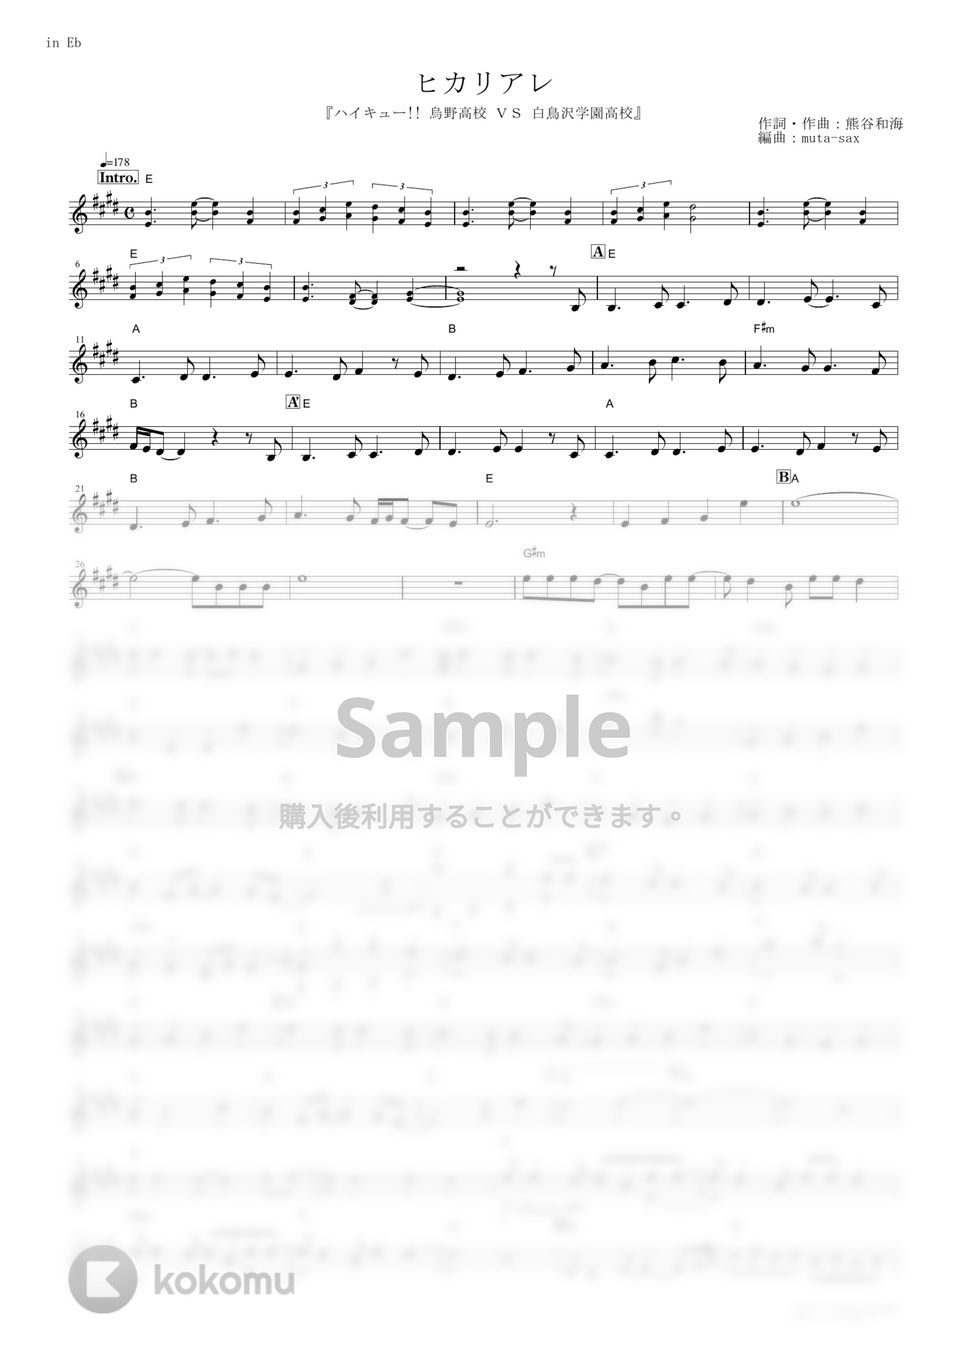 BURNOUT SYNDROMES - ヒカリアレ (『ハイキュー!! 烏野高校 ＶＳ 白鳥沢学園高校』 / in Eb) by muta-sax